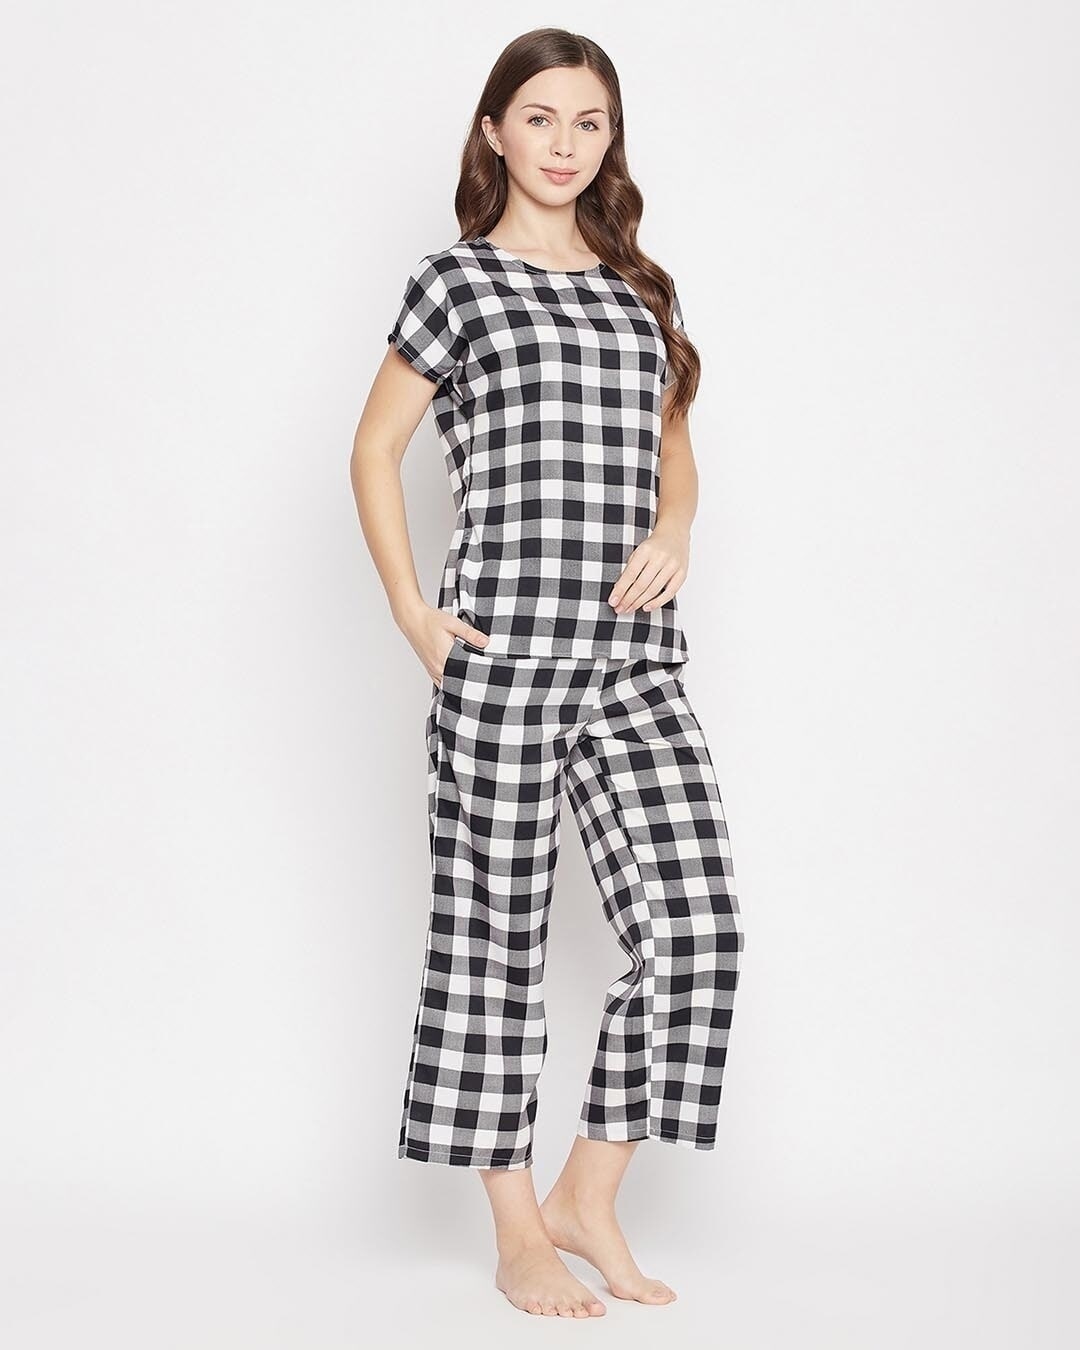 Shop Women's Black Checkered Top & Pyjama Set (Pack of 2)